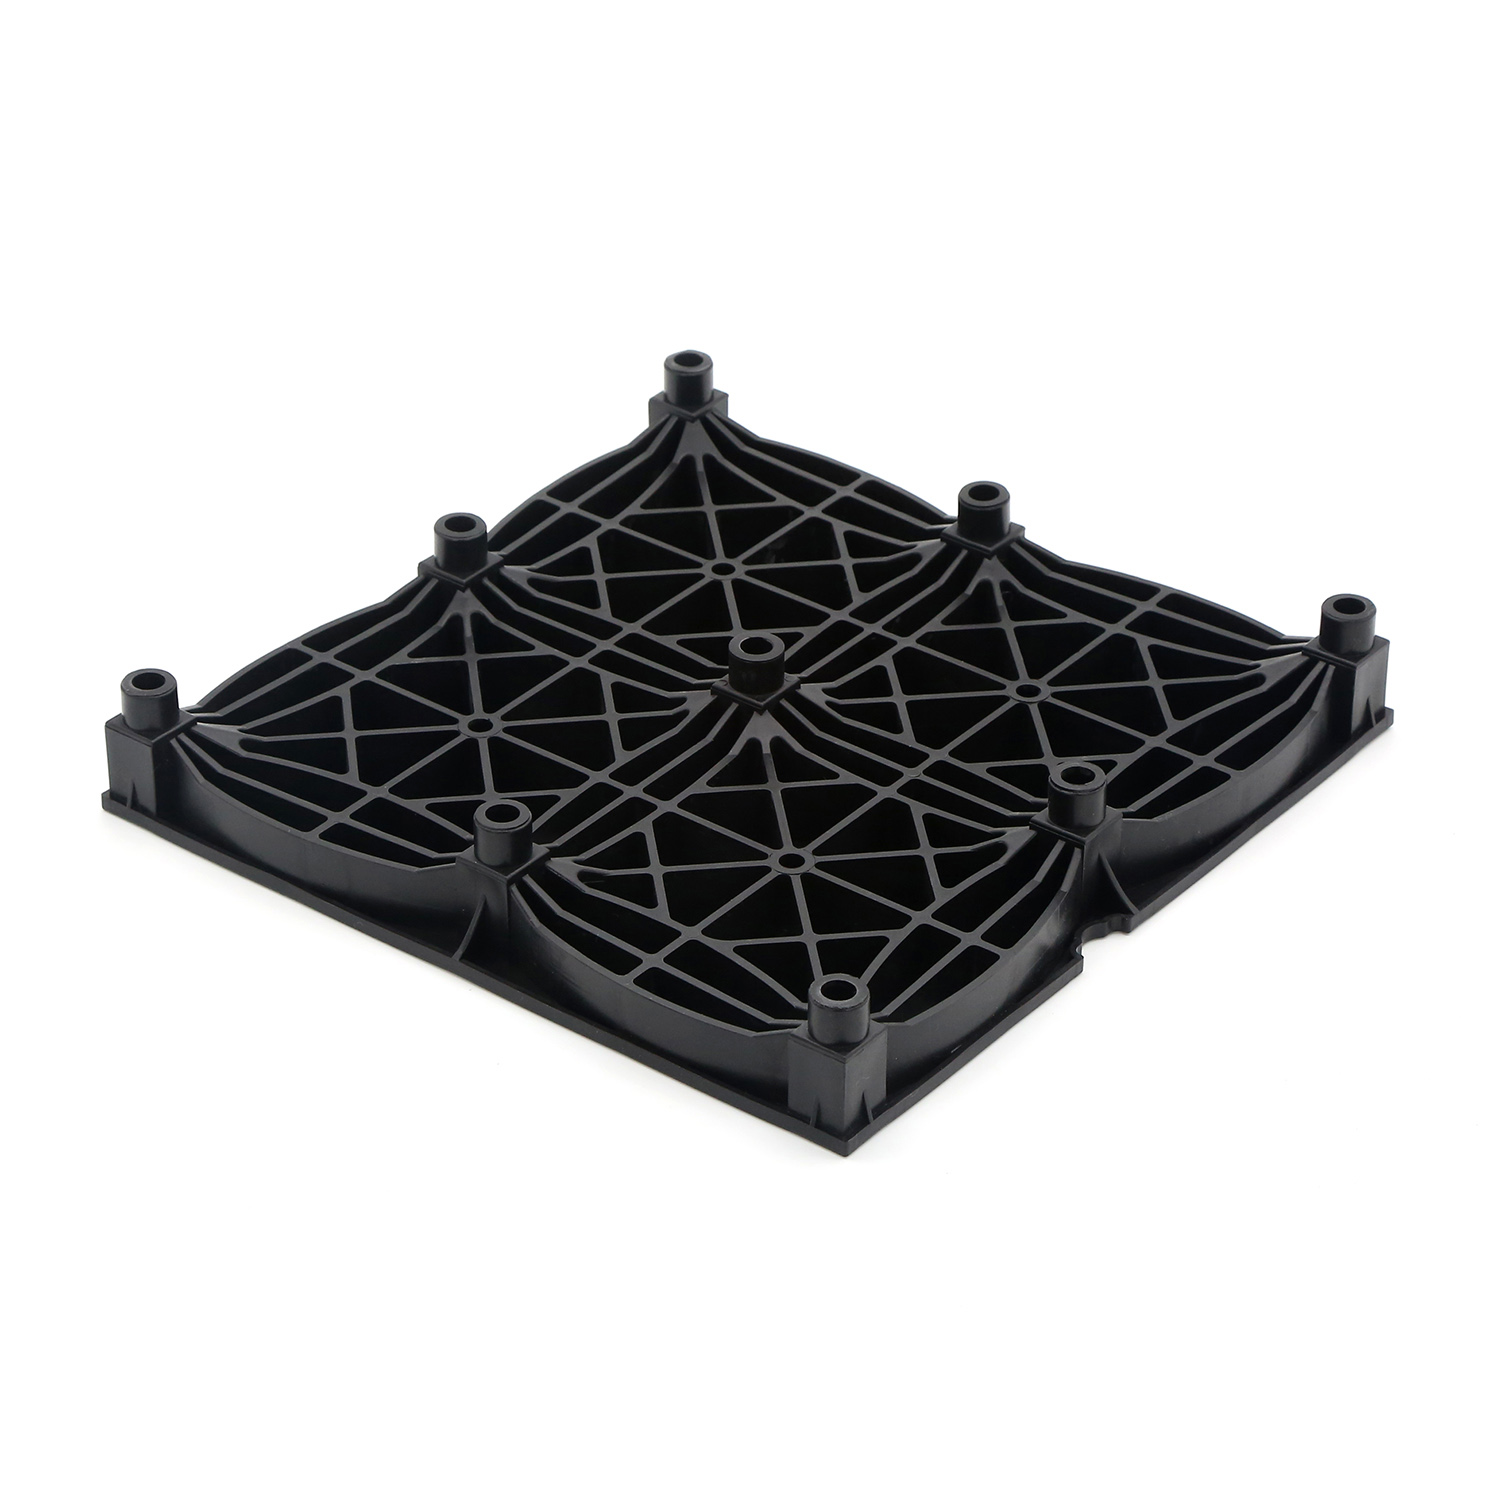 Easy-to-care Hexagonal Plastic Floor for Kitchens